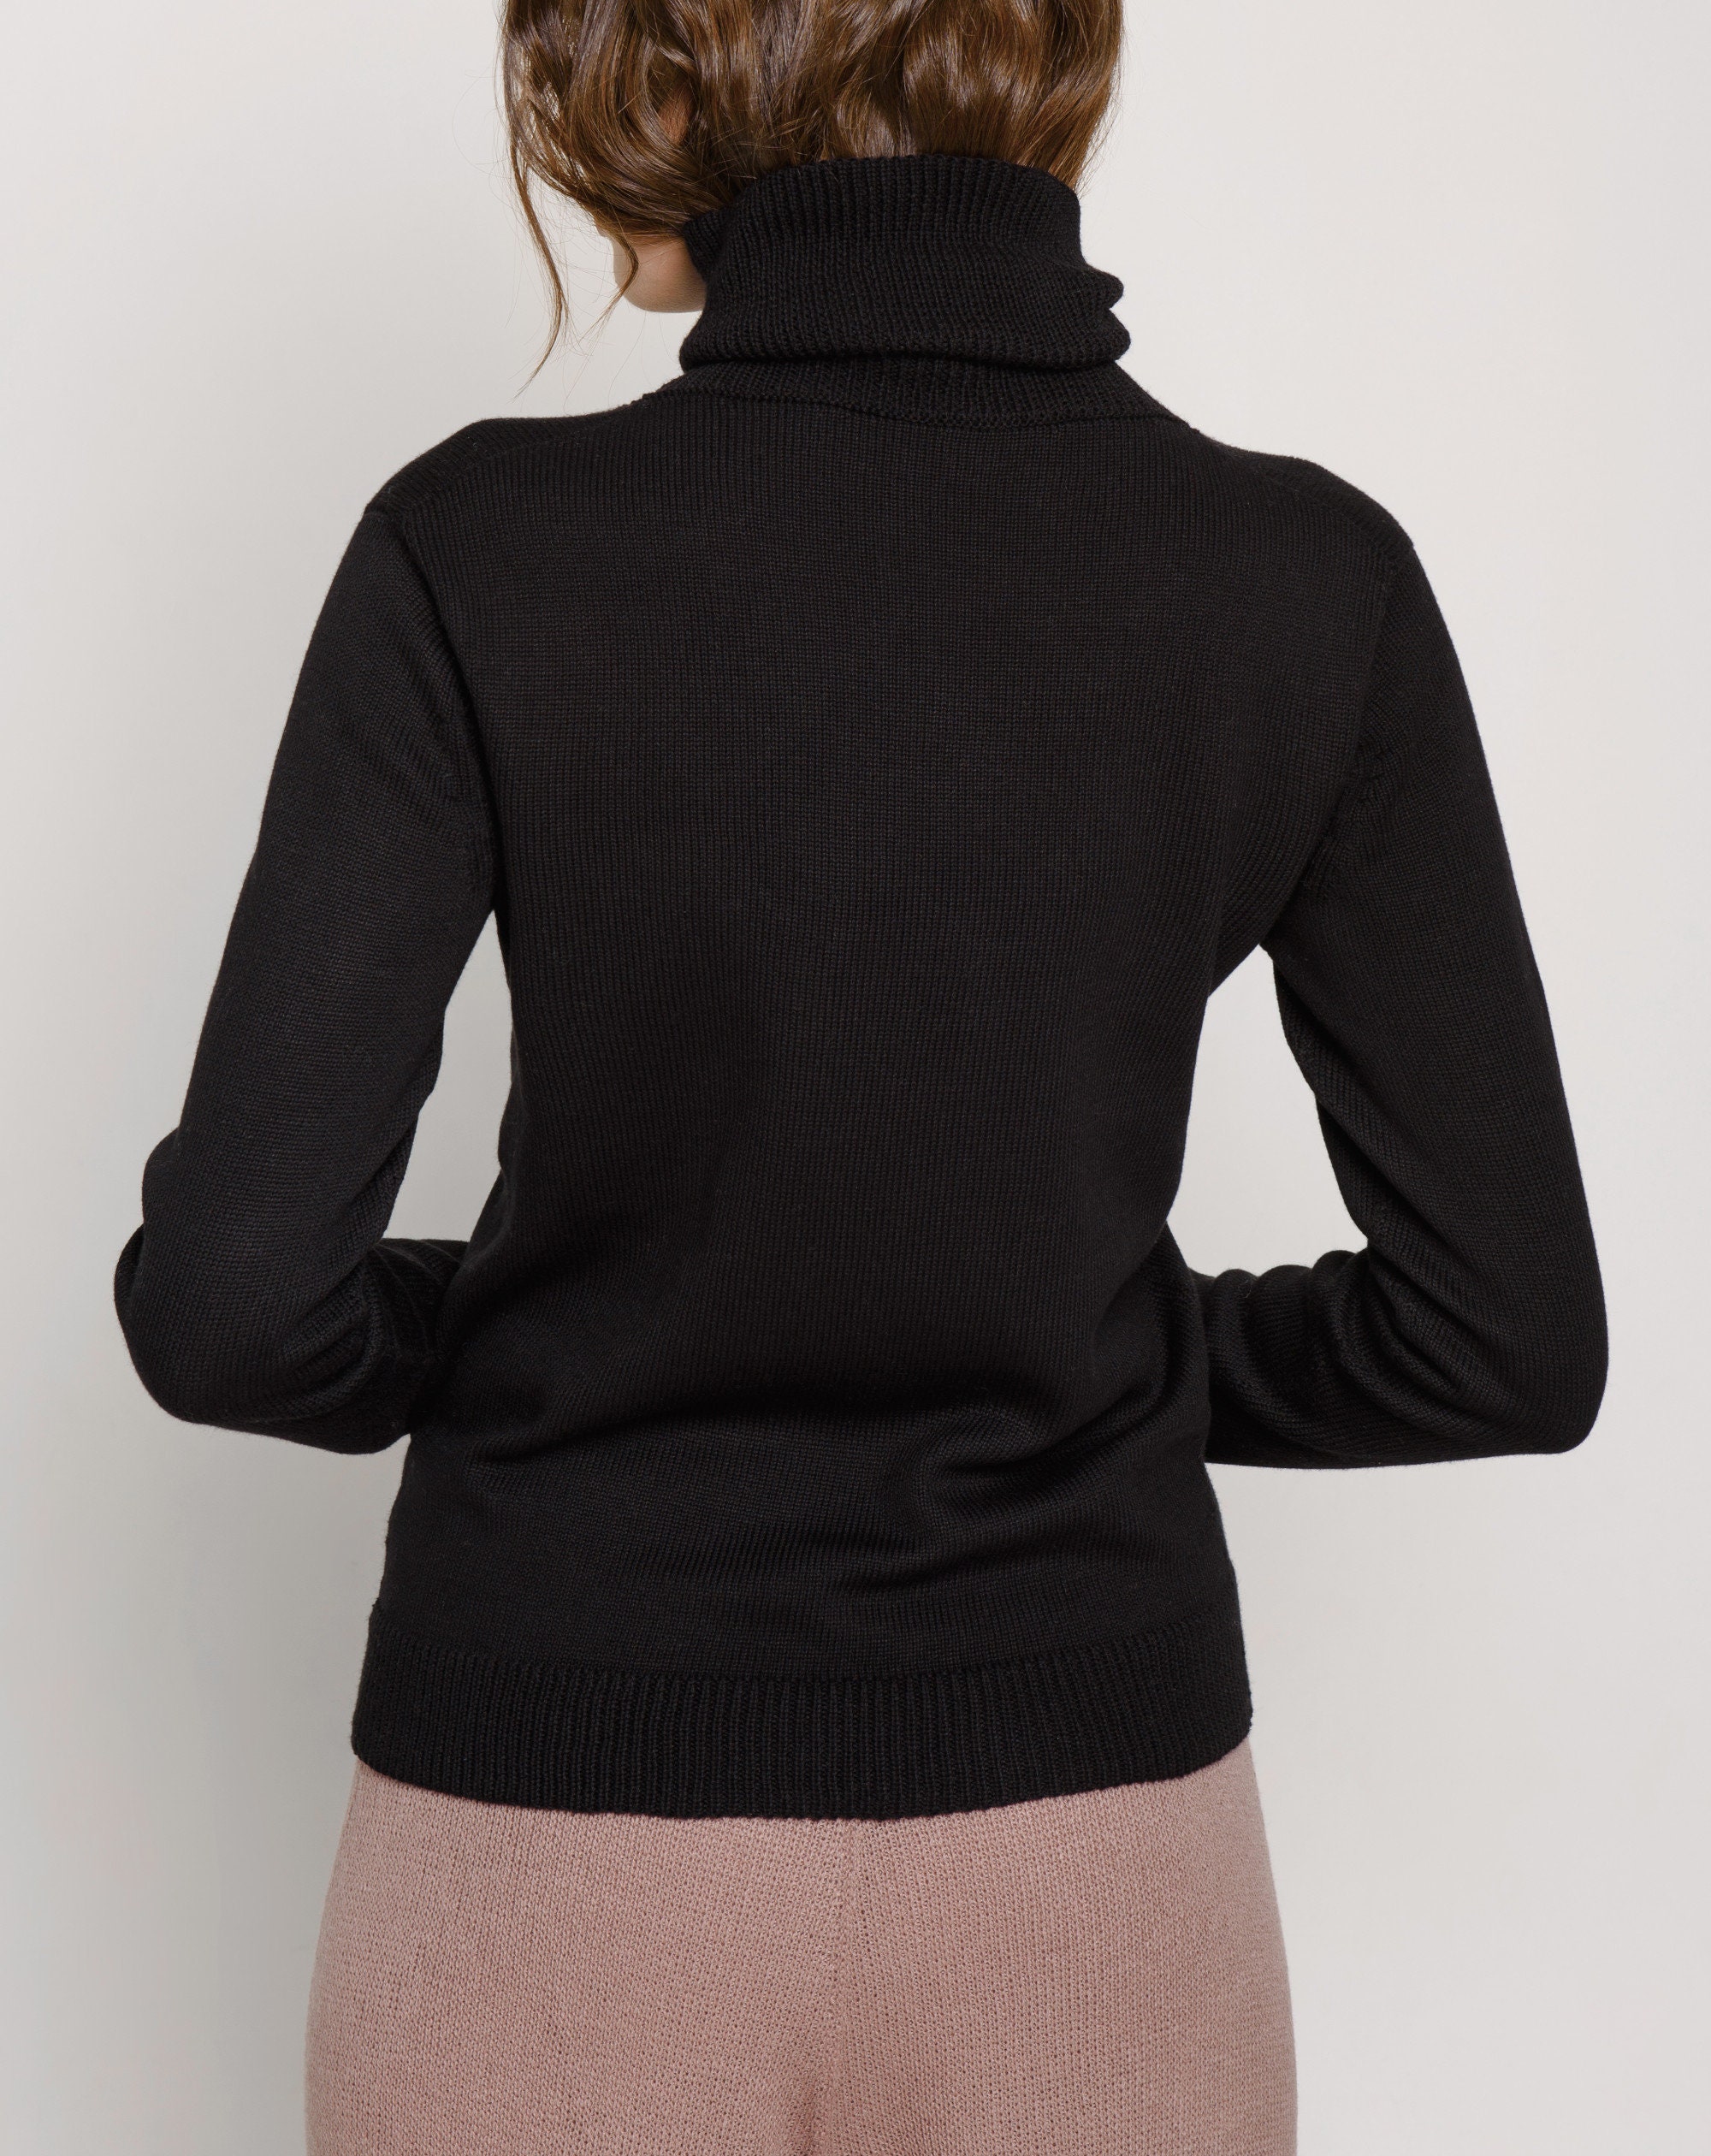 Black turtleneck sweater cotton-silk-cashmere | Etsy